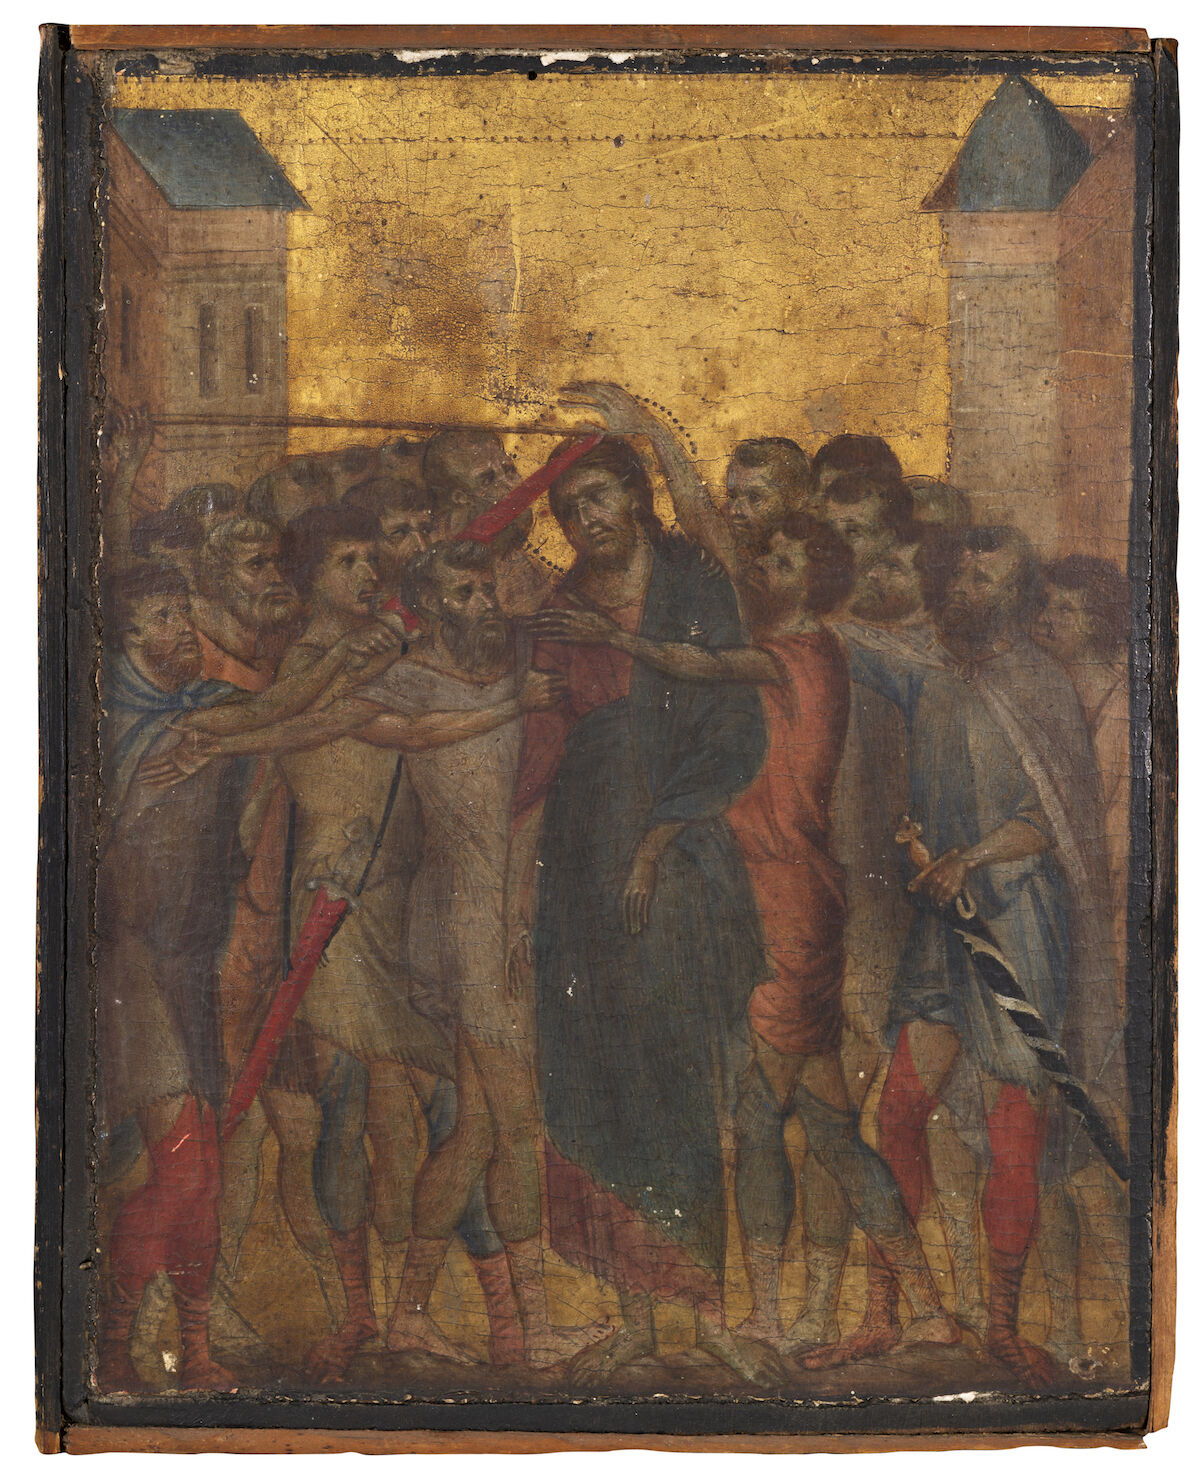 Cimabue, The Mocking of Christ or Christ Mocked.  Sold for €24.1 million ($26.8 million). Image © Actéon.